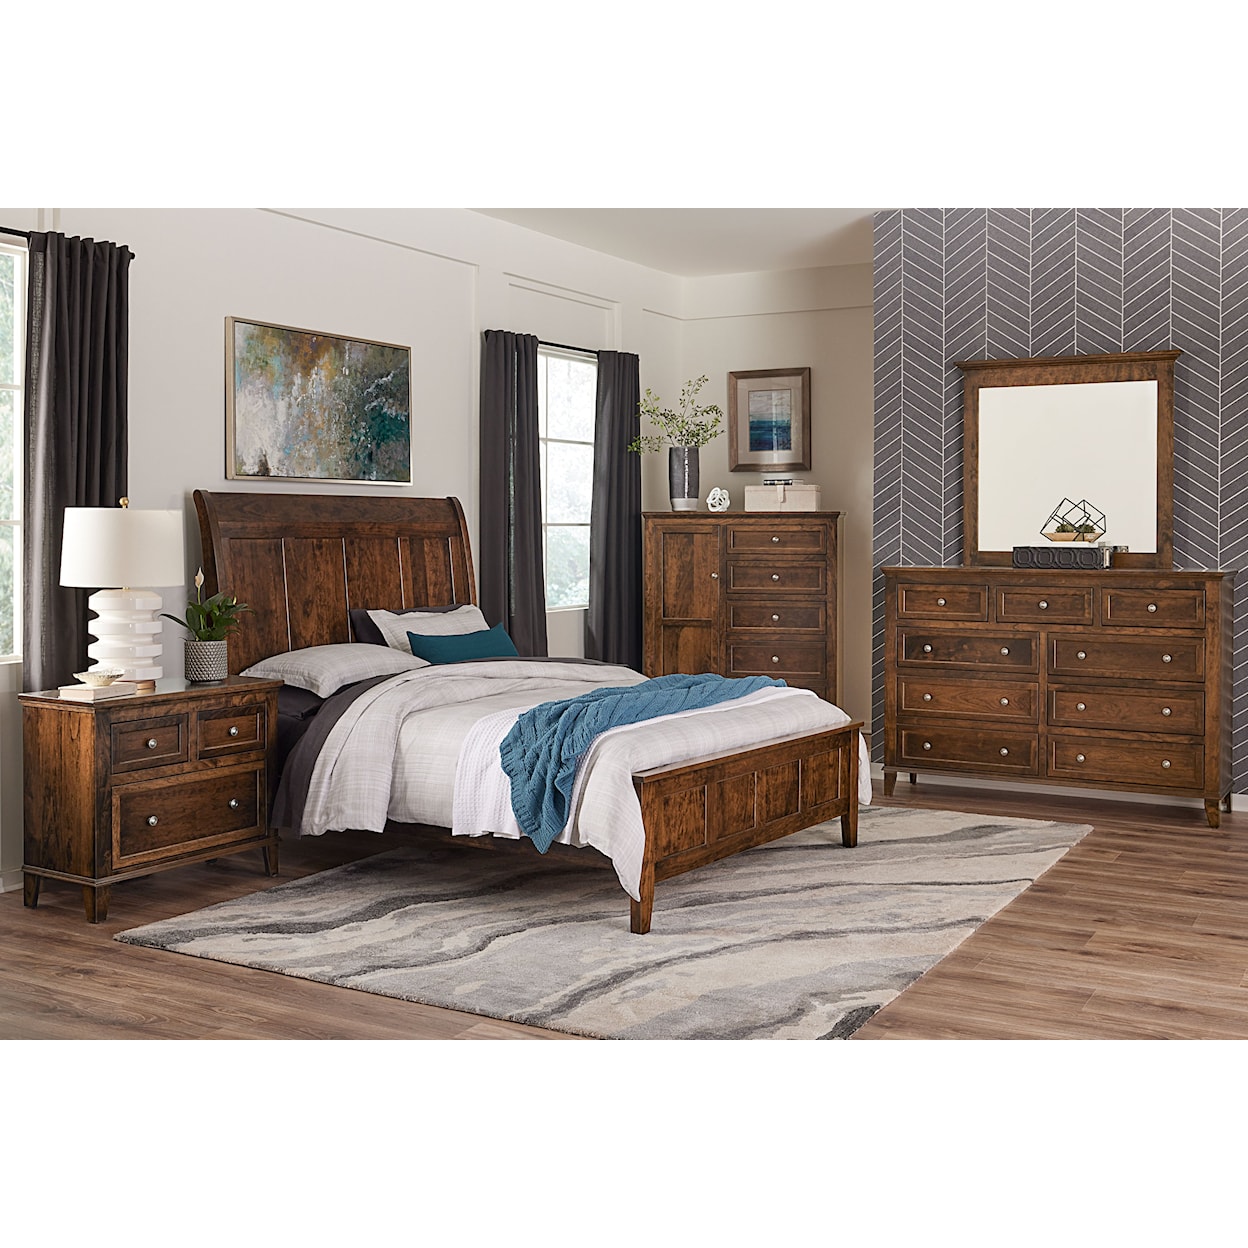 Archbold Furniture Belmont Queen 5-Piece Bedroom Set